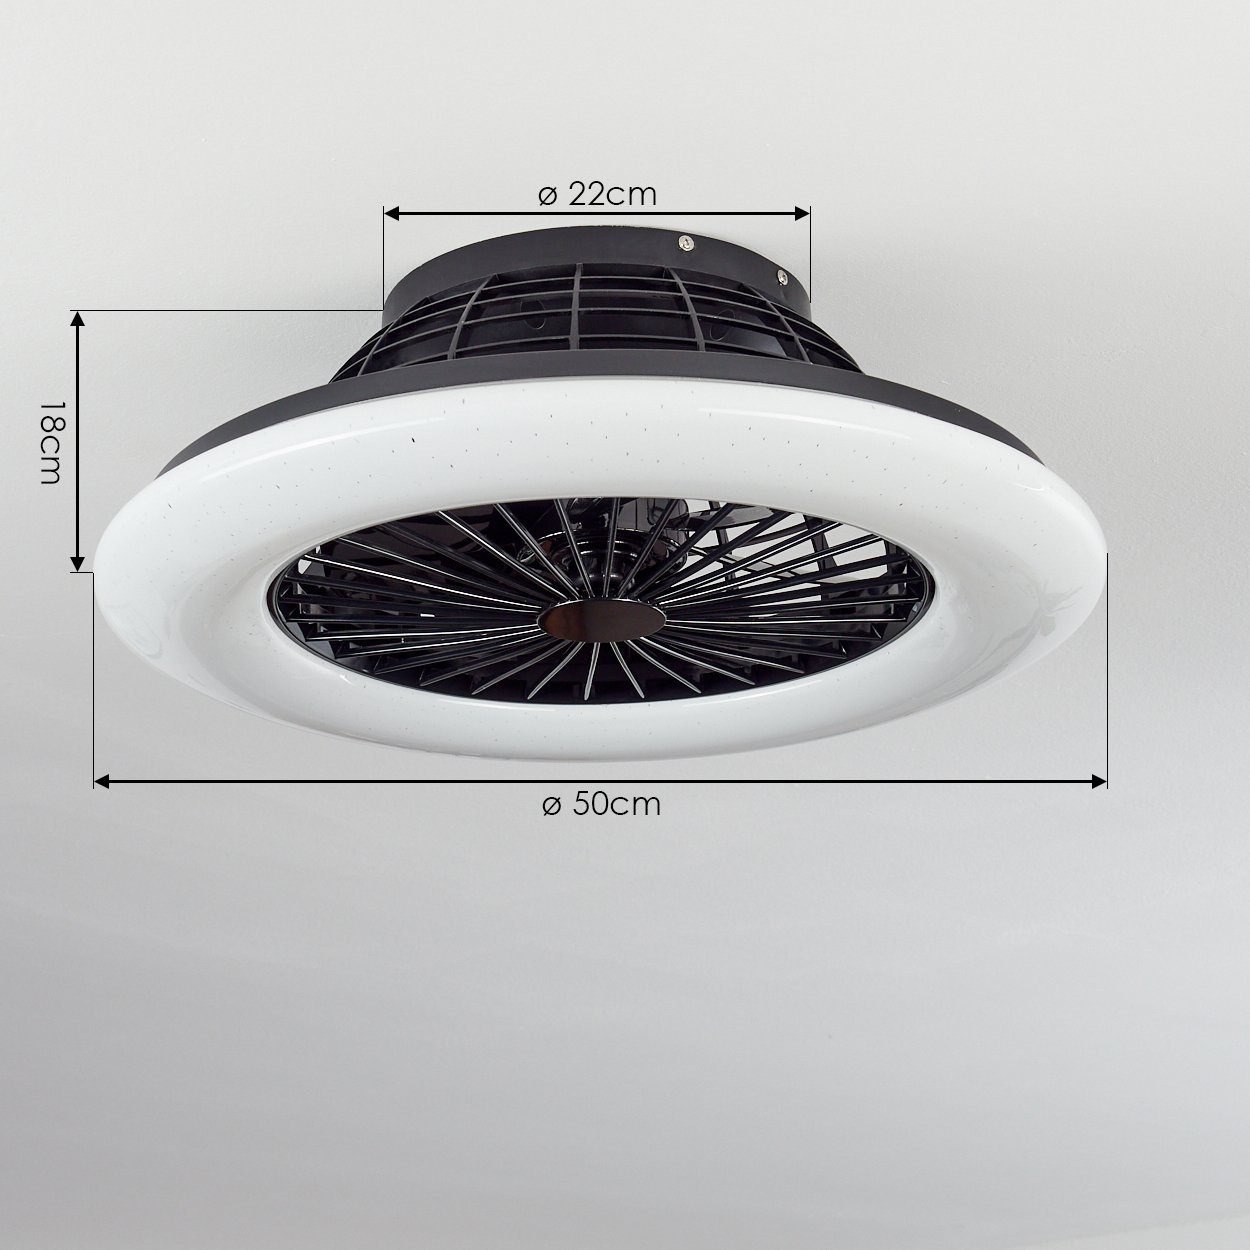 hofstein Tischturmventilator Weiß Metall, Deckenlampe, aus »Concas« Ventilator Kunststoff, Schwarz